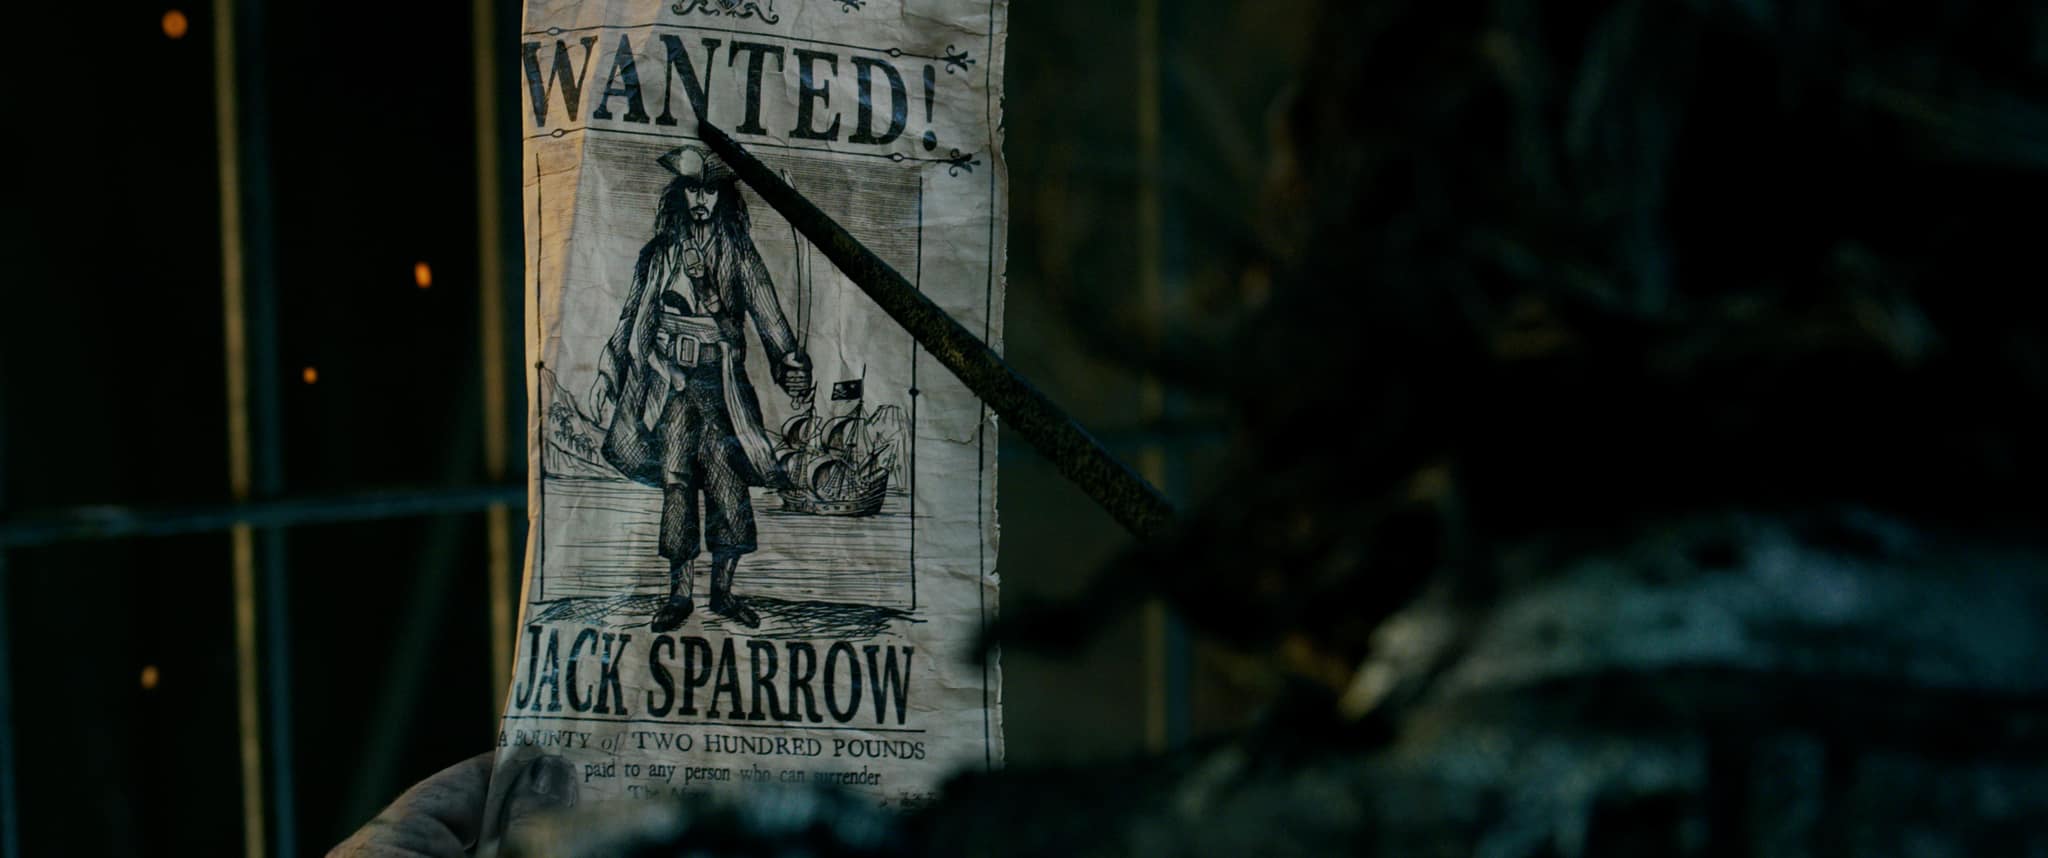 Teaser Trailer for Pirates Of The Caribbean: Dead Men Tell No Tales - The Farm Girl Gabs®